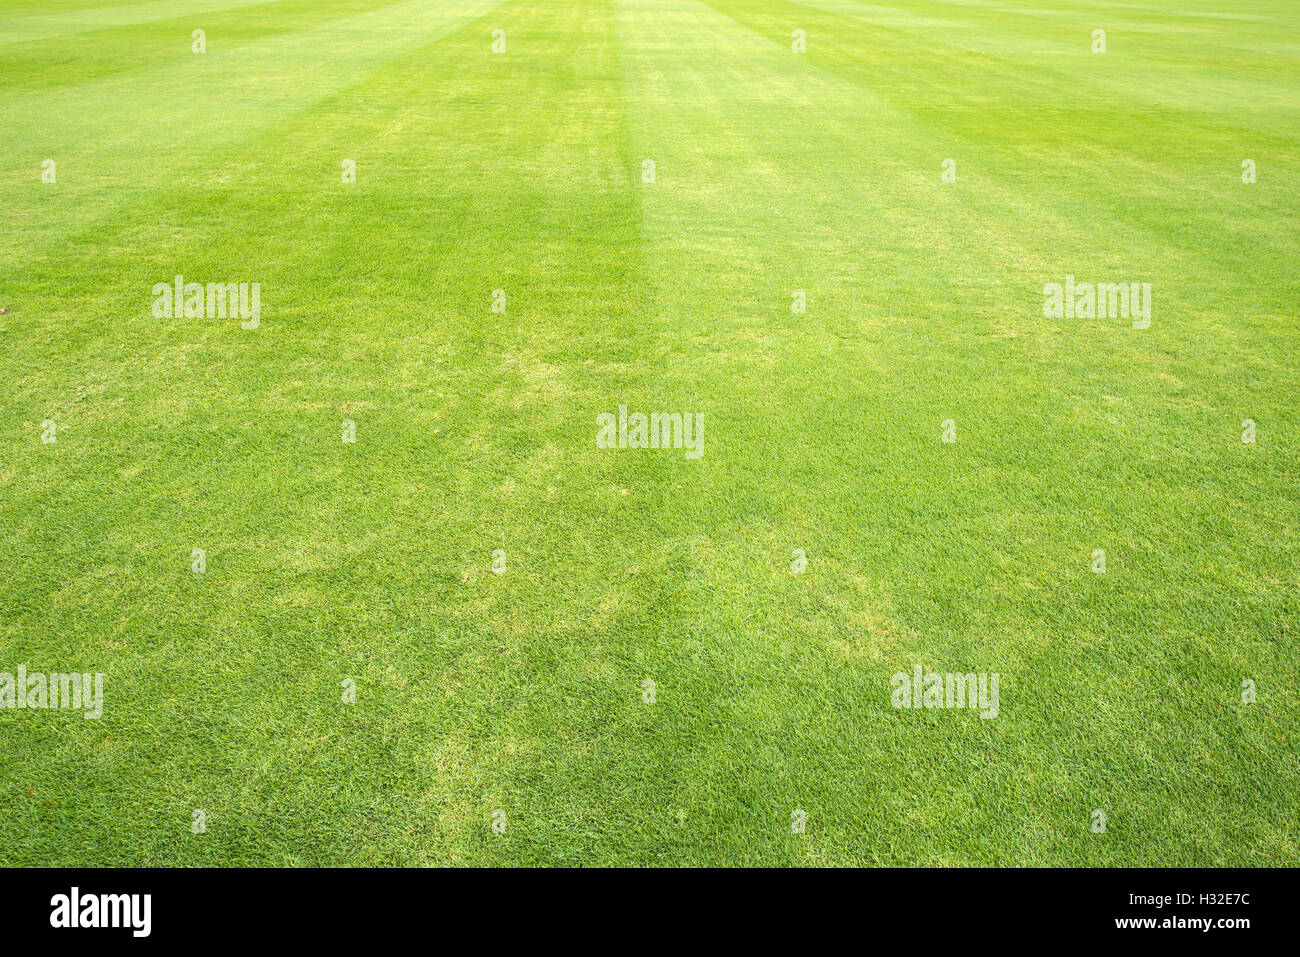 grünen Rasen der Sportplatz Stockfoto